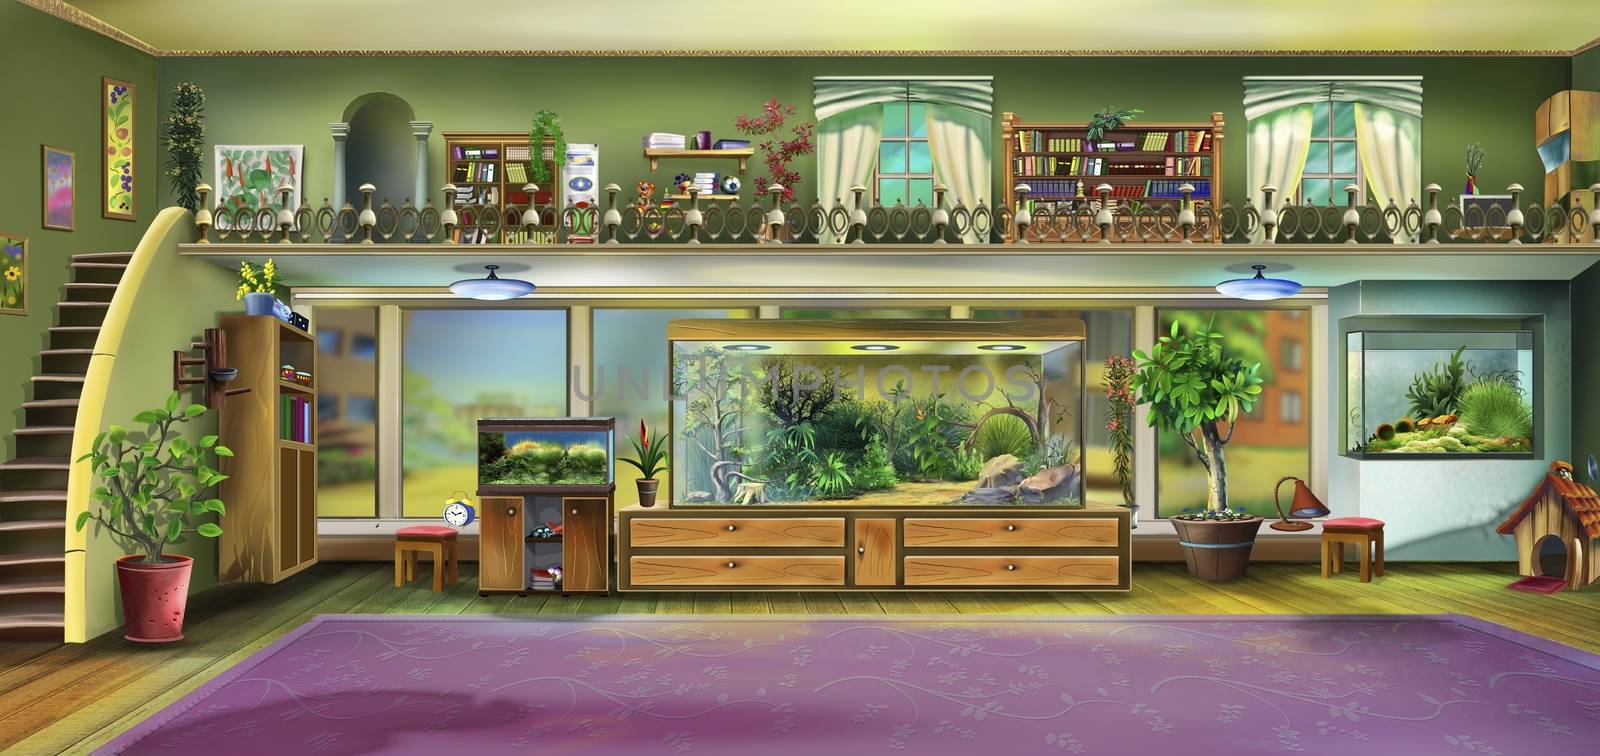 Home Interior with Aquariums by Multipedia